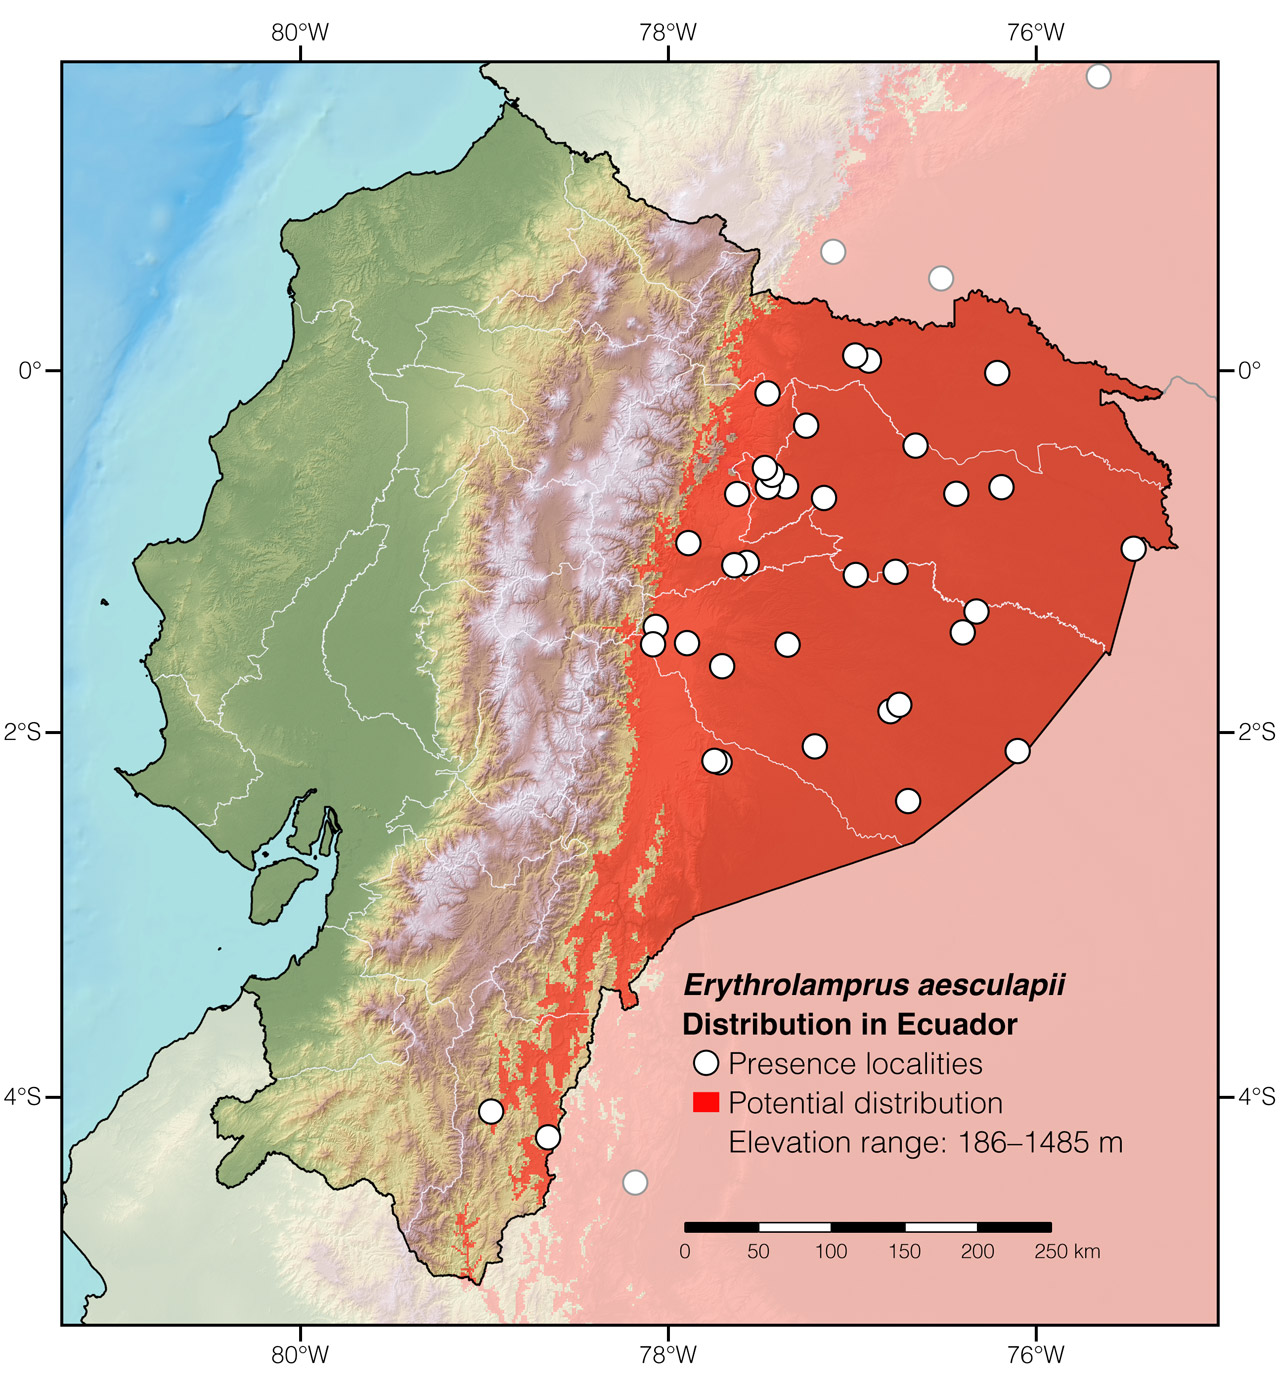 Distribution of Erythrolamprus aesculapii in Ecuador